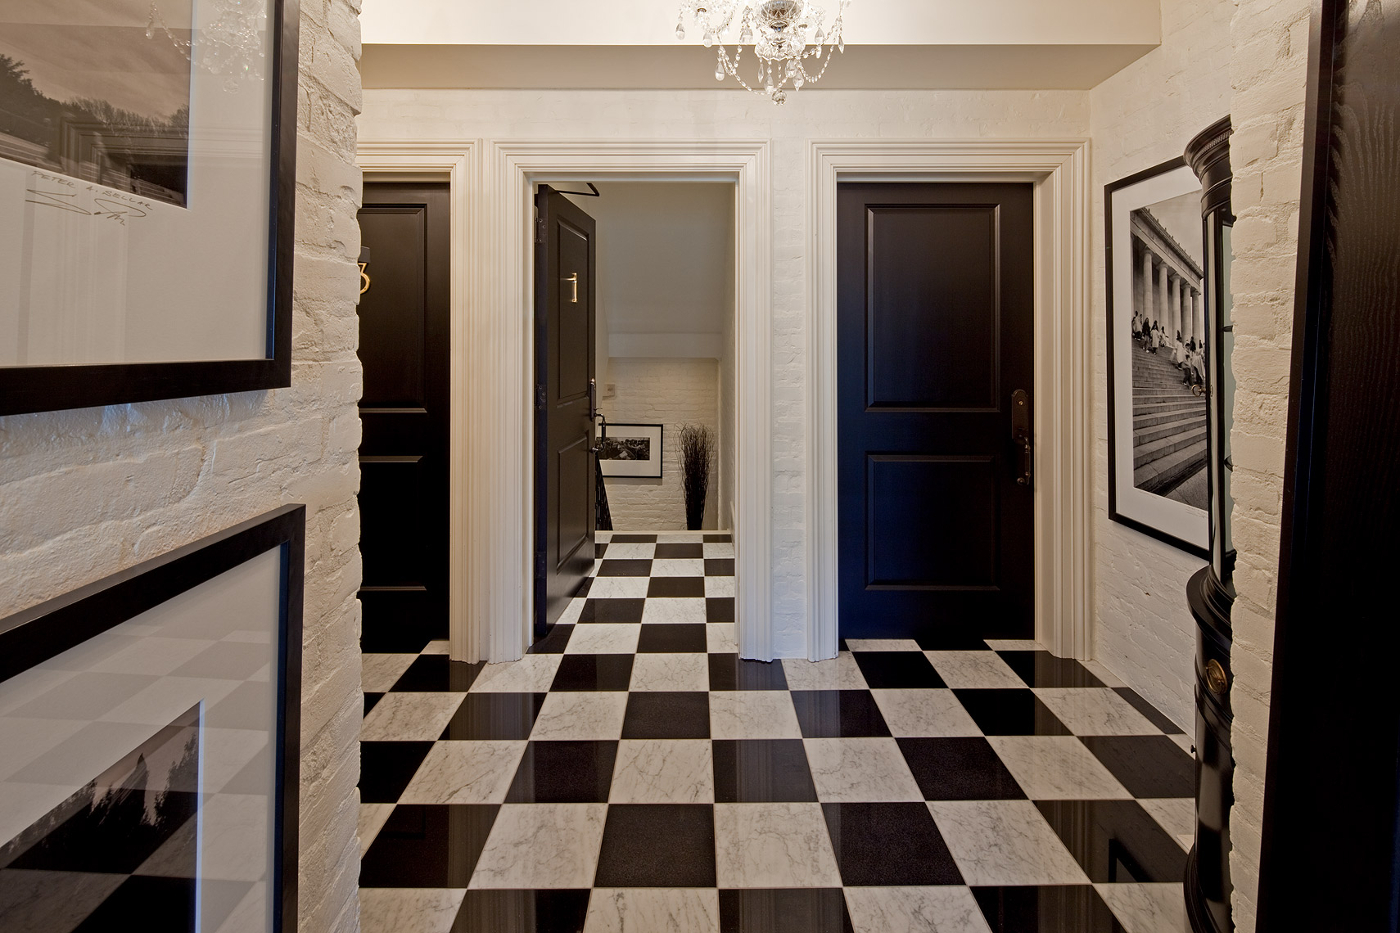 плитка на пол коридор и кухня в одном стиле